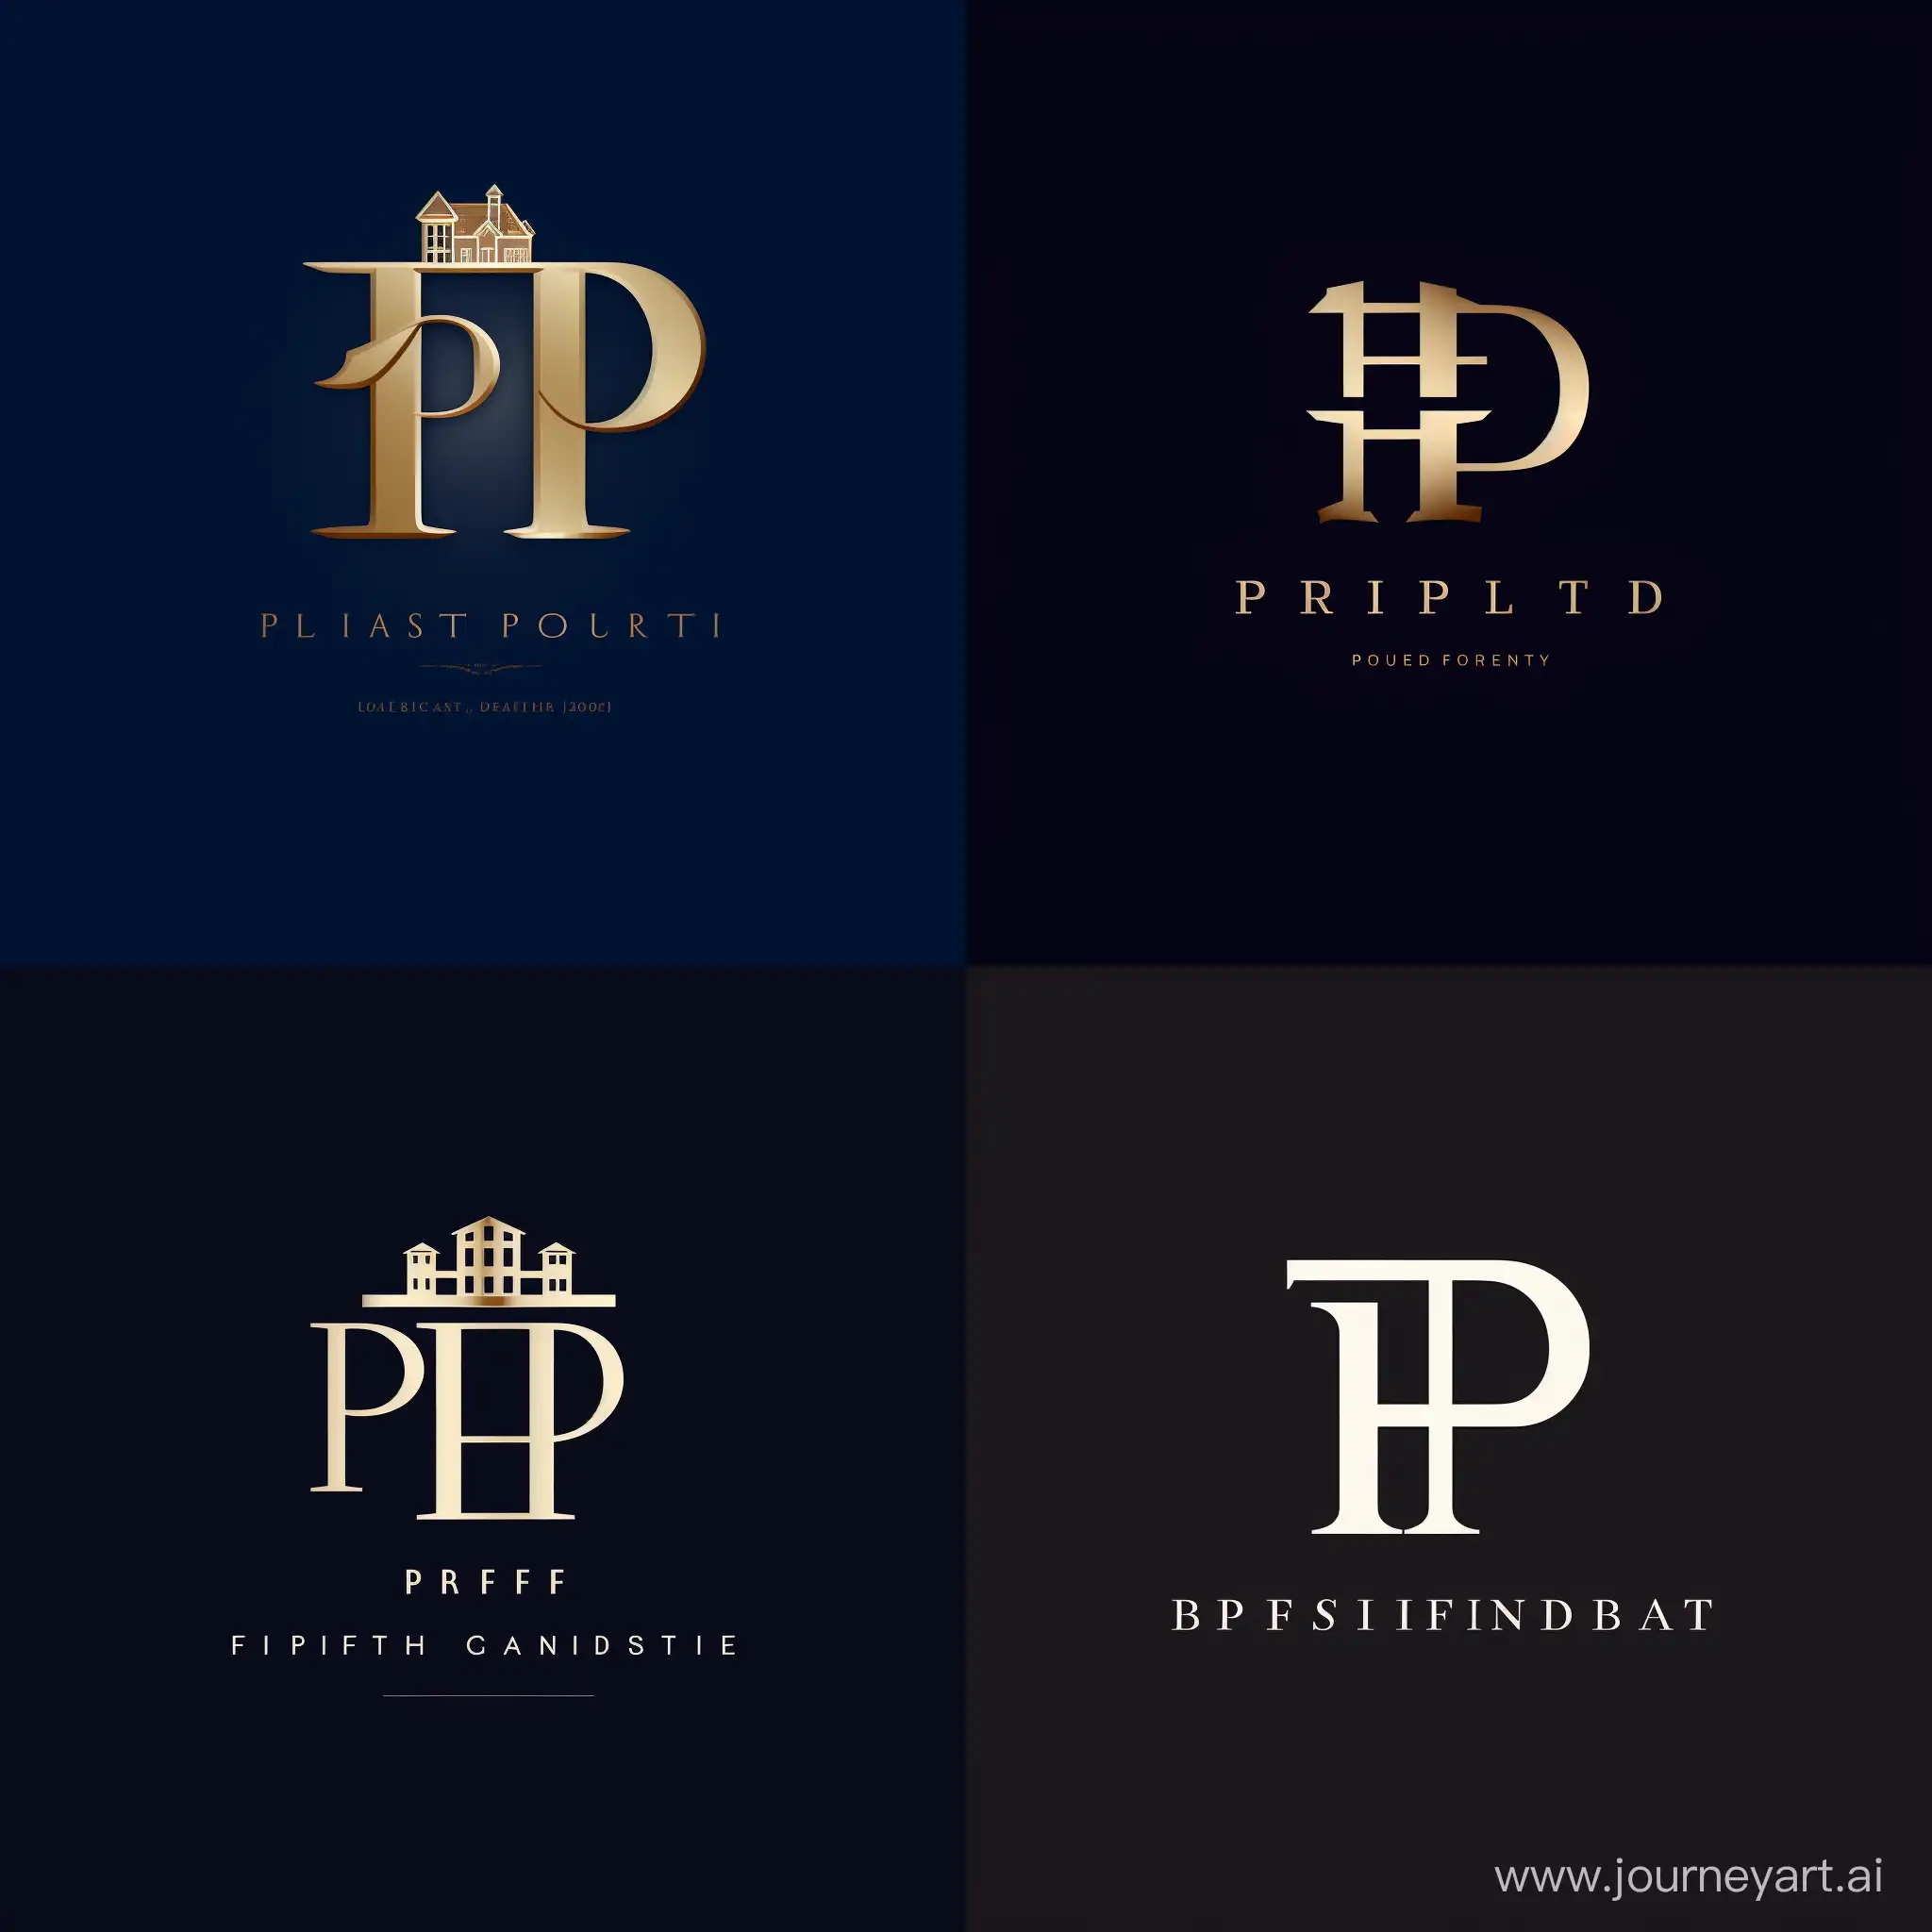 Modern-Real-Estate-Logo-Design-with-BFPD-Immobilien-Letters